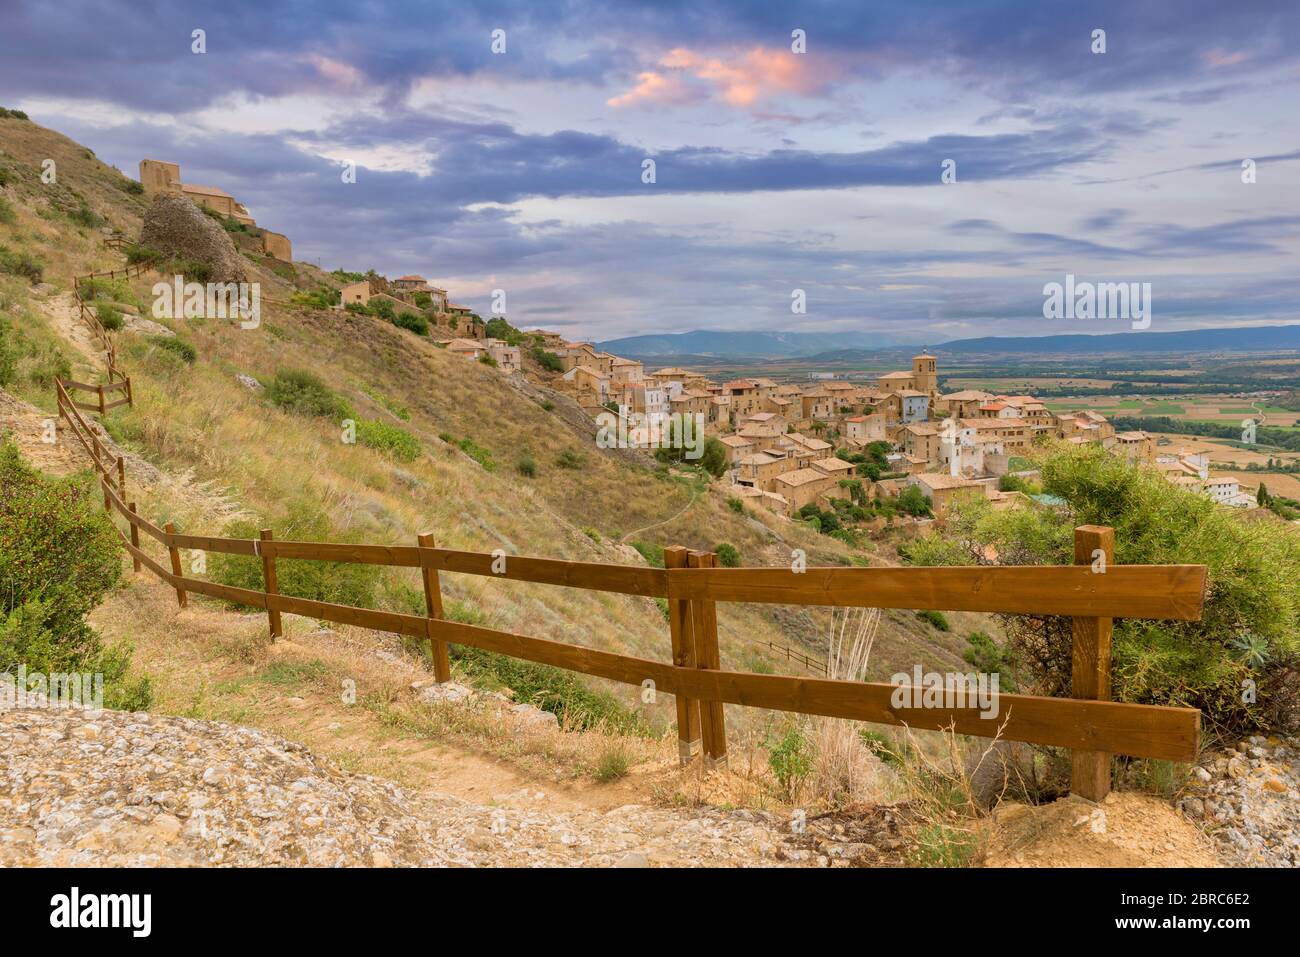 The town of Gallipienzo de Navarra in Spain Stock Photo